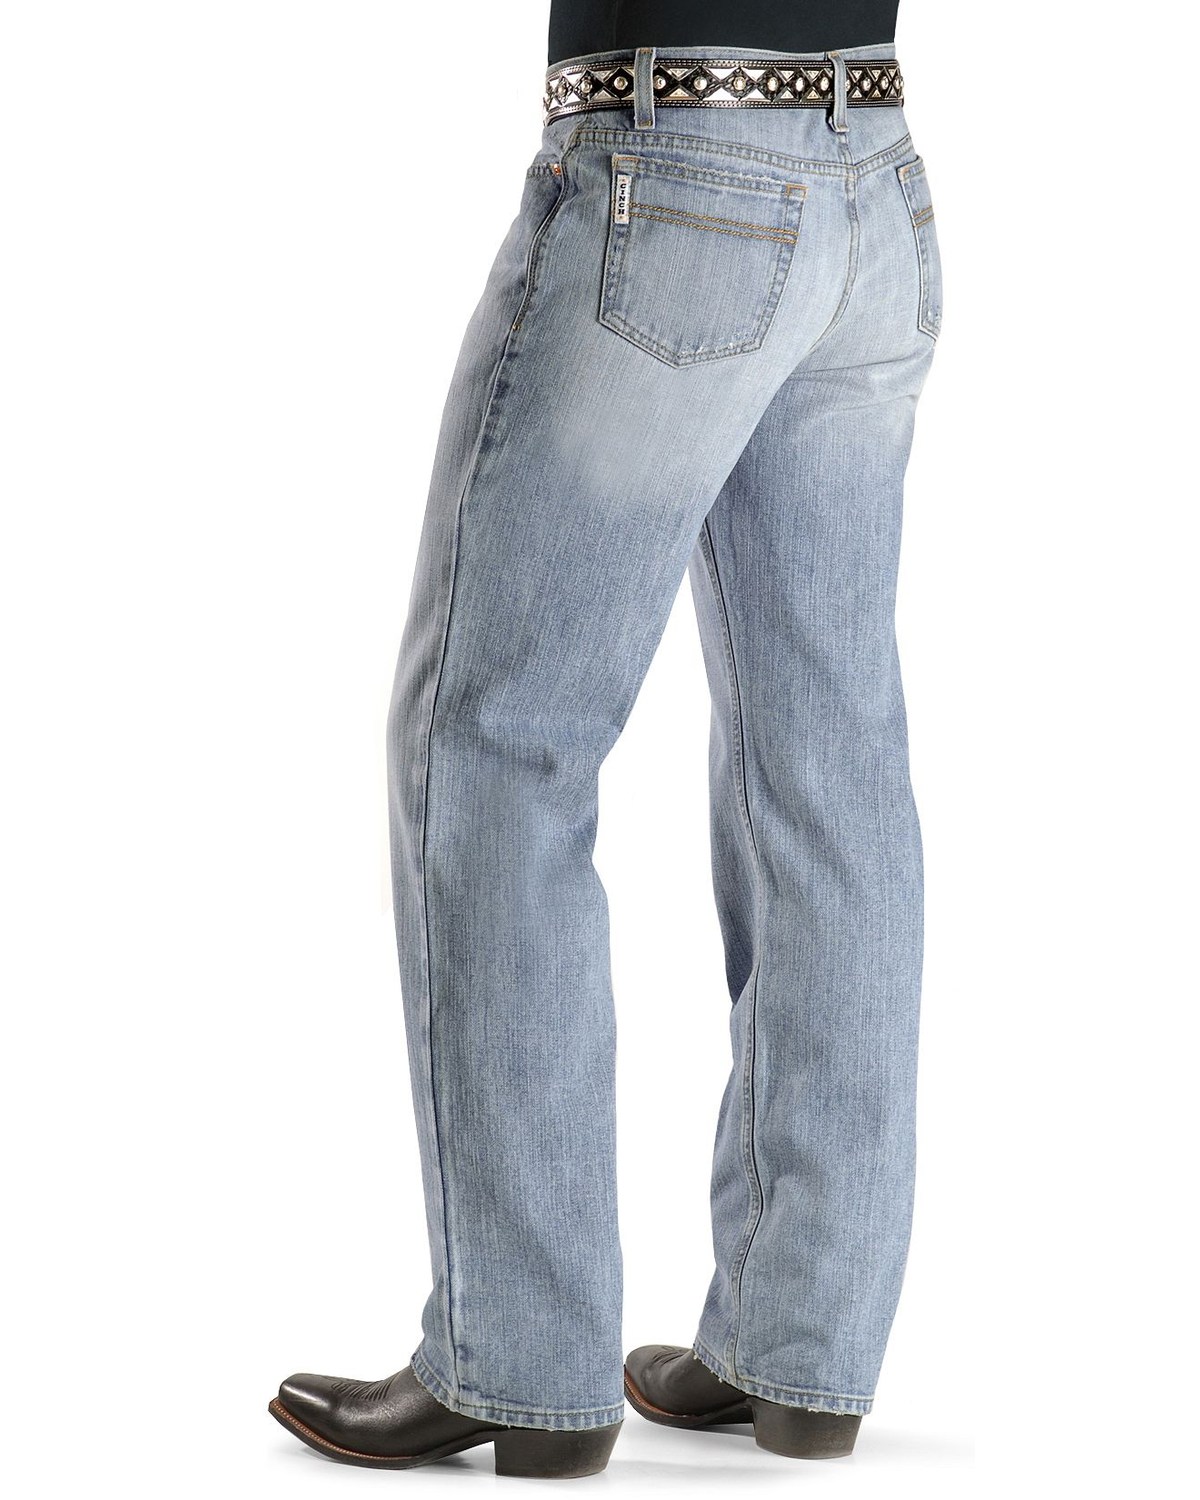 cinch jeans